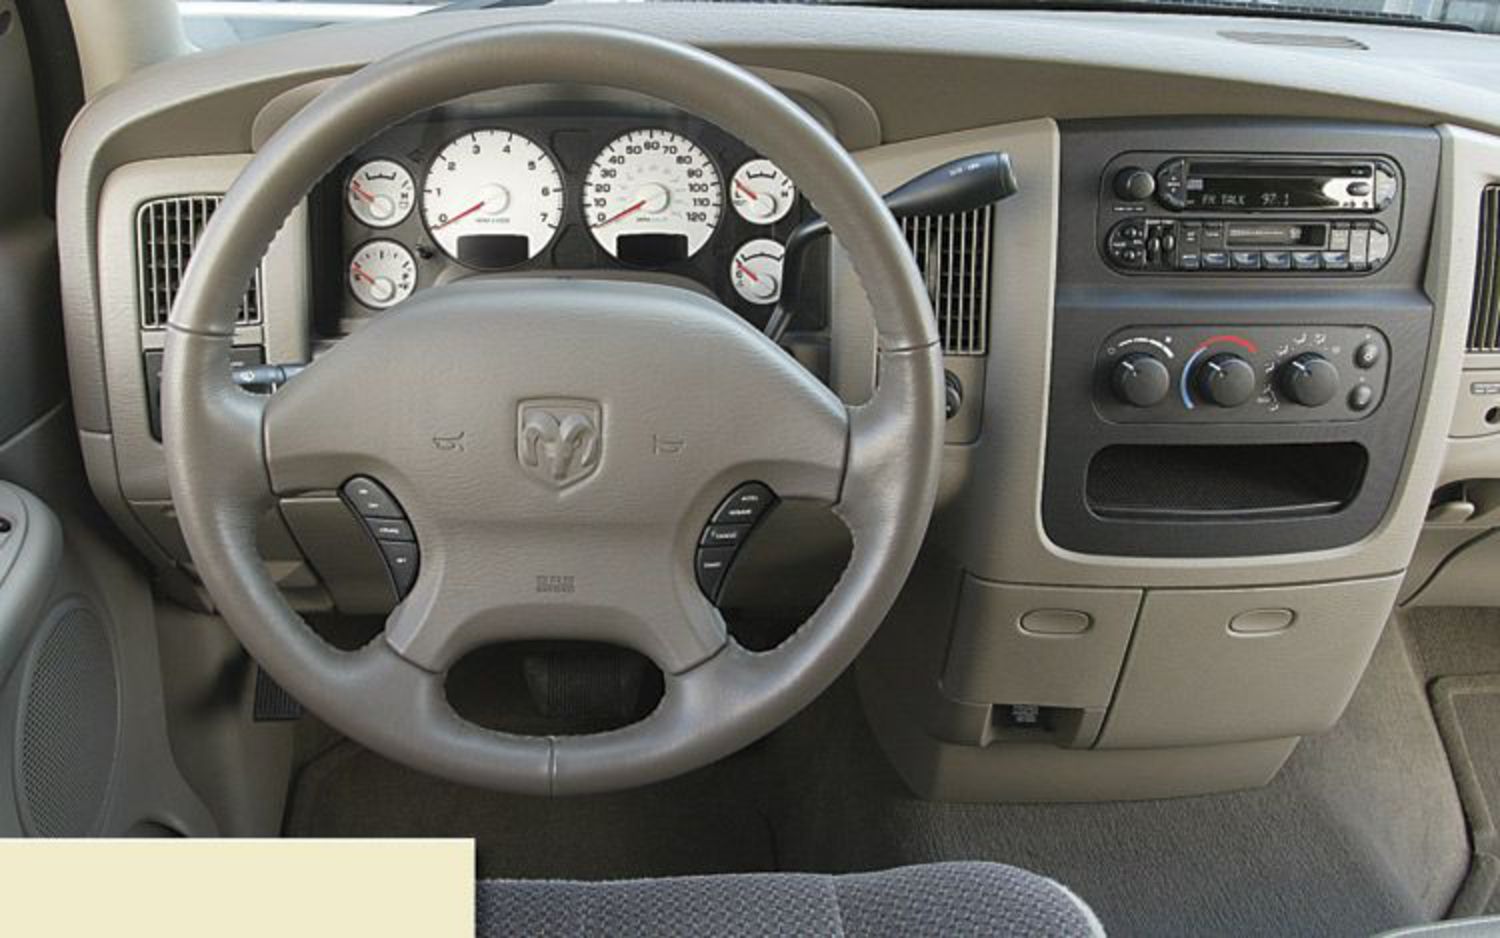 2003 Dodge Ram 150 Slt Hemi Dash View